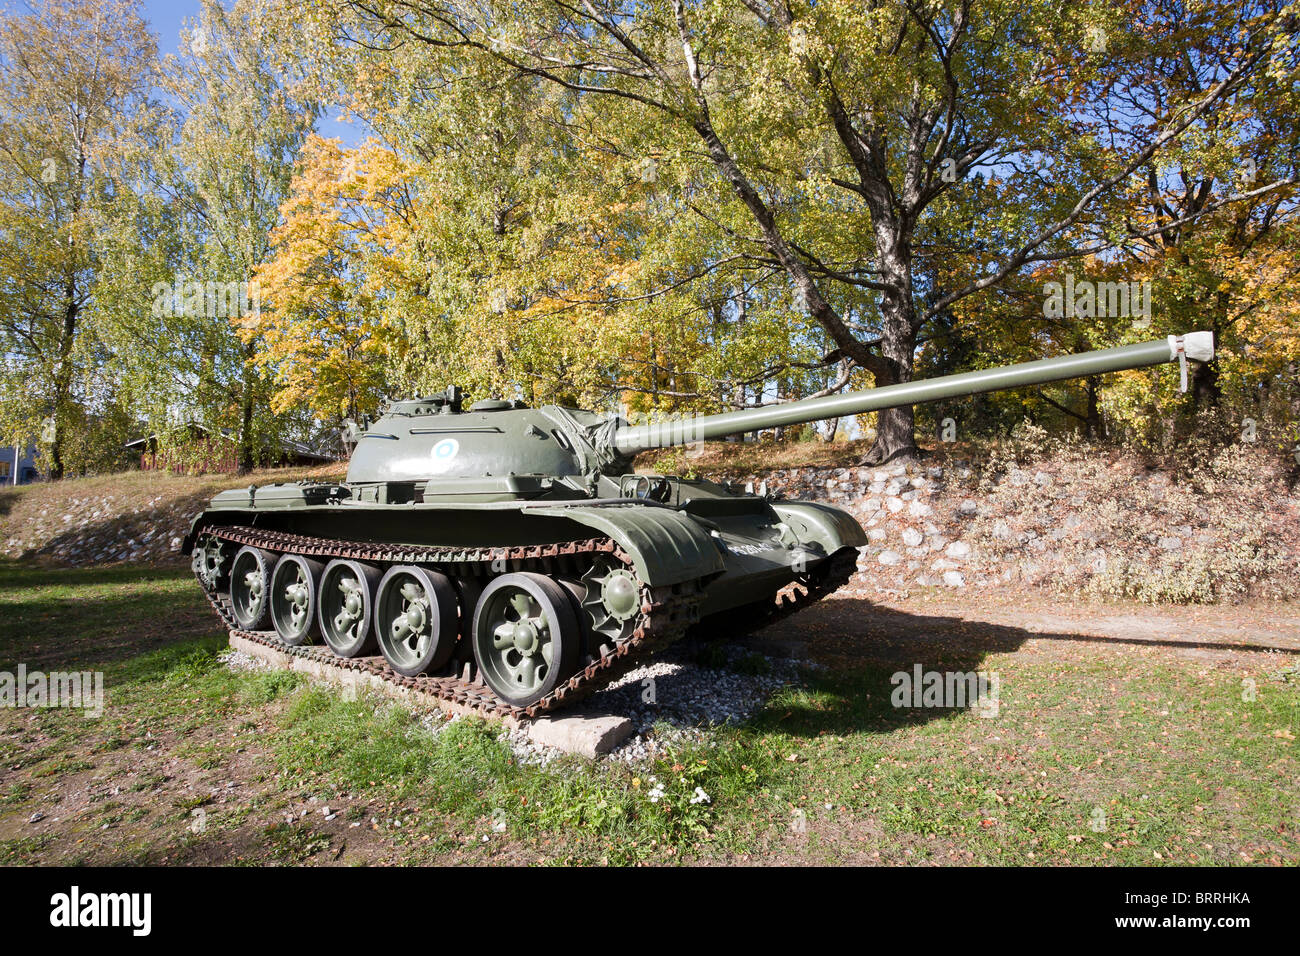 T-54 tank on display in Lappeenranta Finland Stock Photo